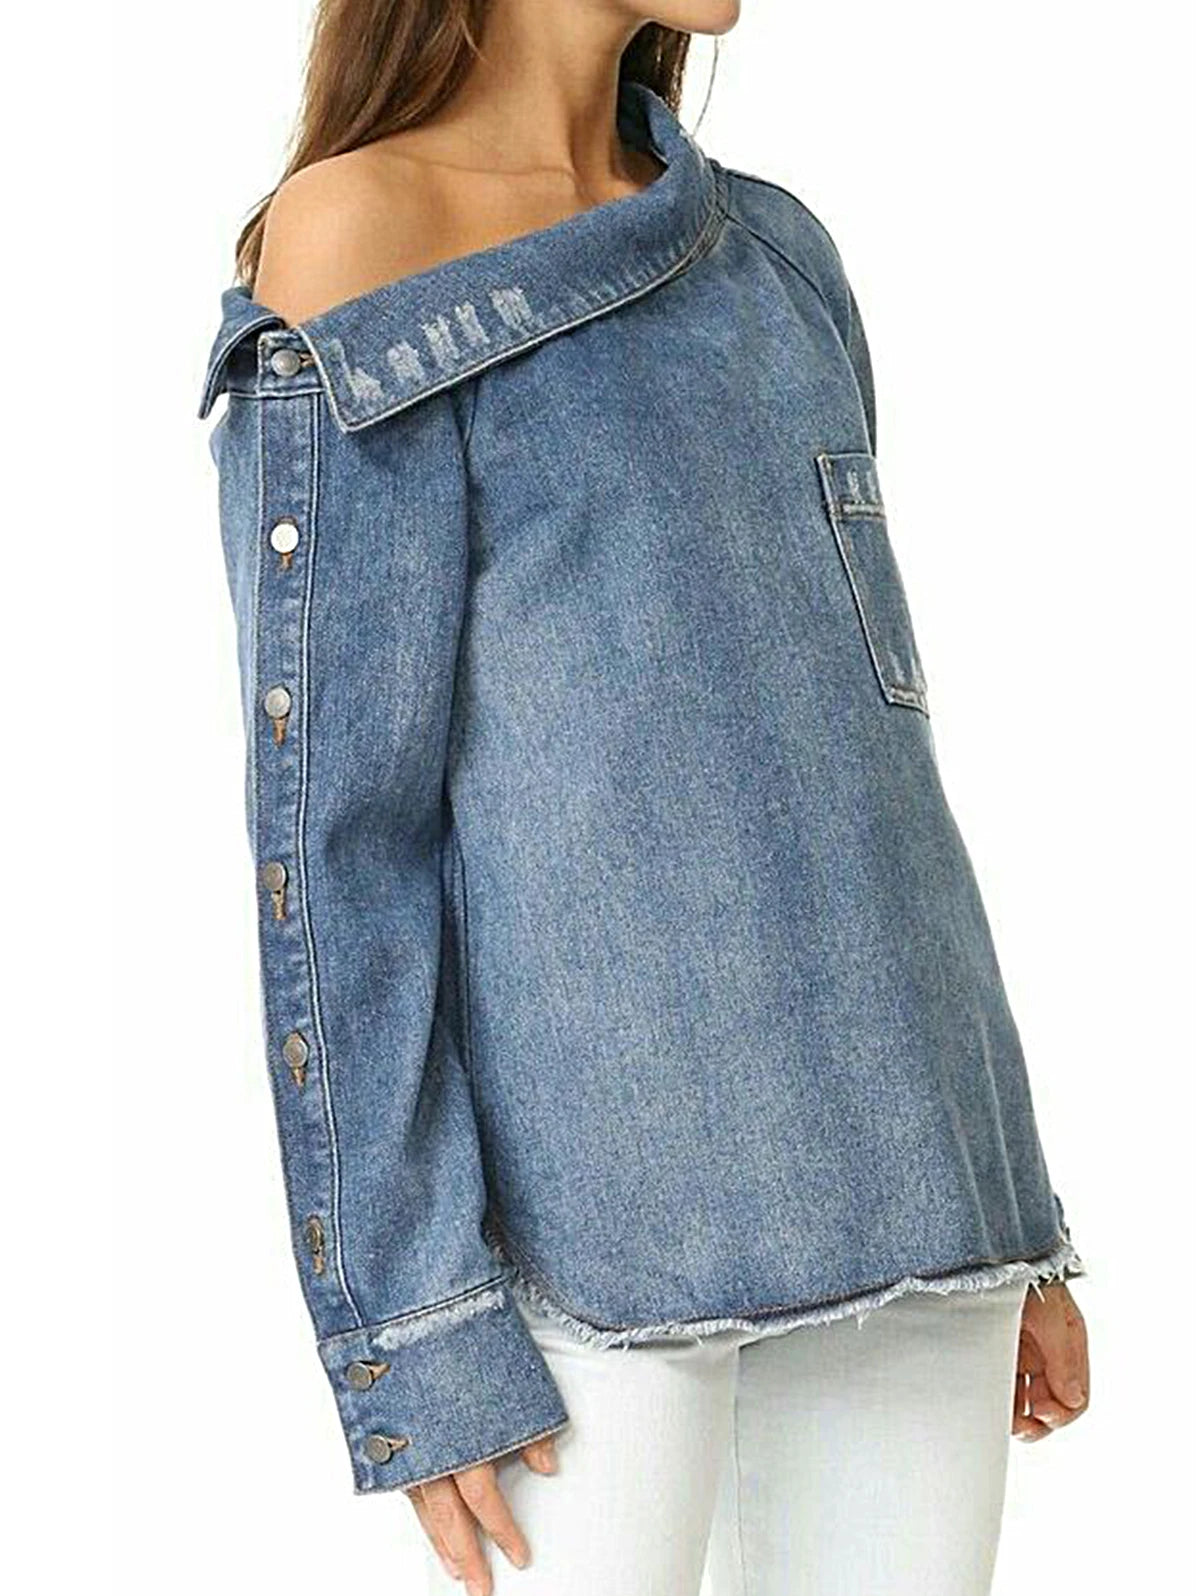 Women Fashion Single Shoulder Asymmetrical Denim Smock Blouse Femme Chic Pocket Buttons Shirt Chemise Blusas Tops voguable